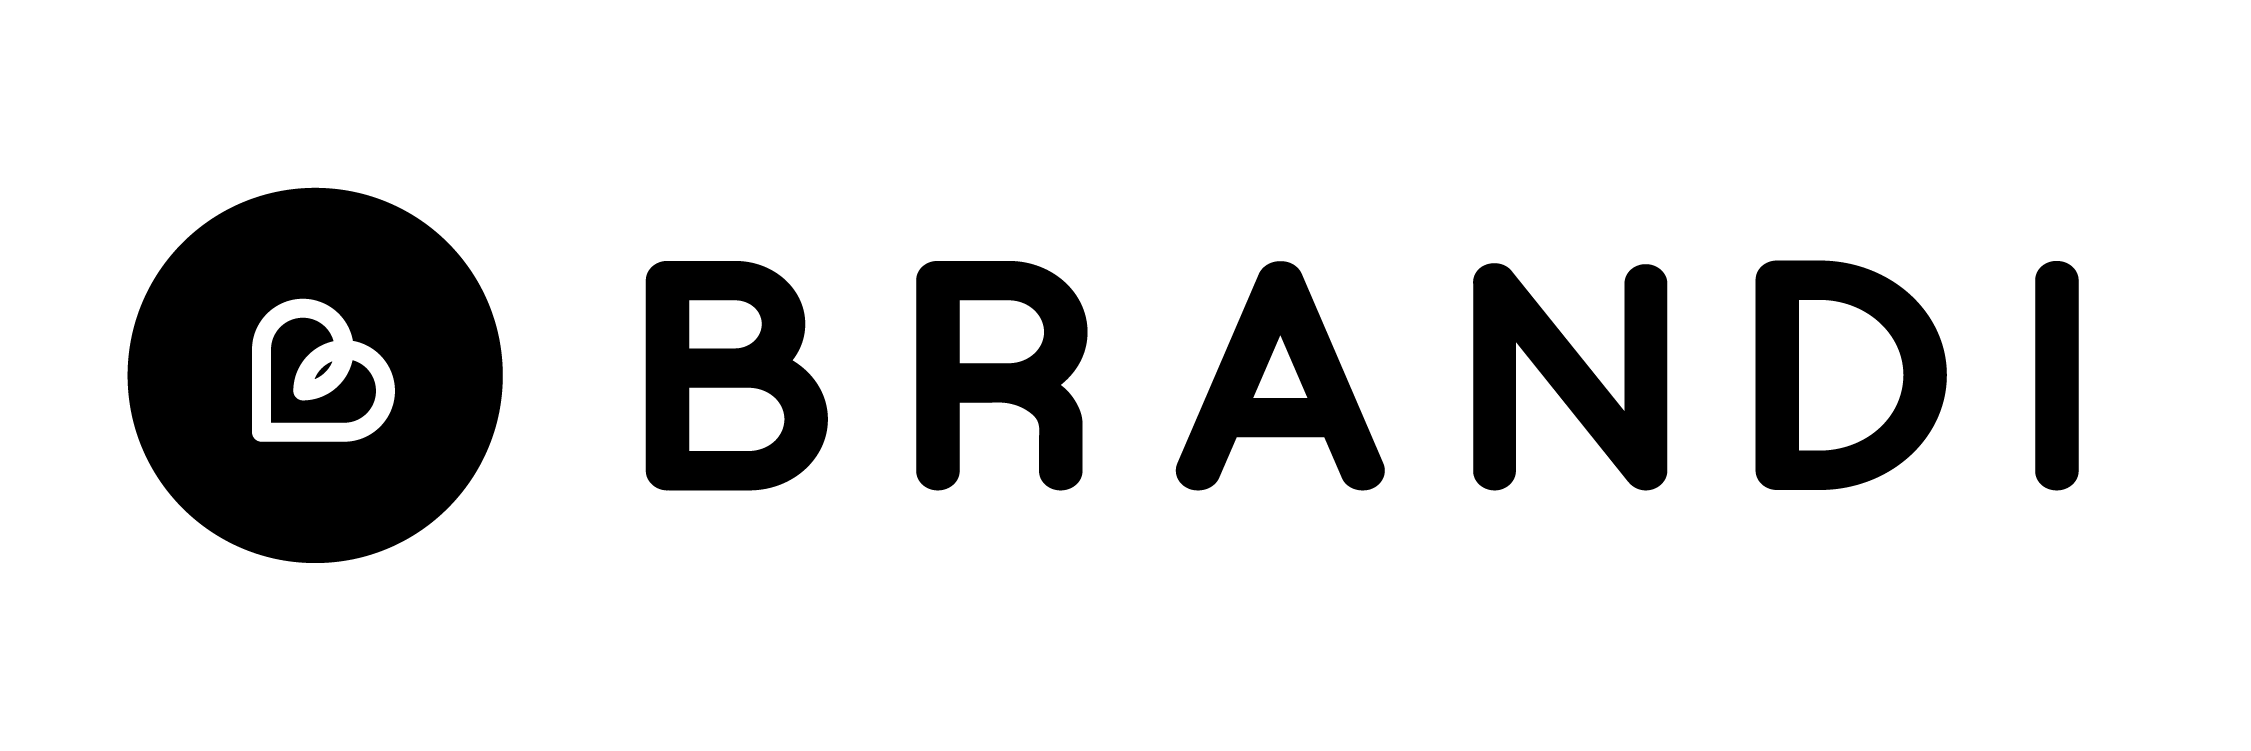 enterprise-logo